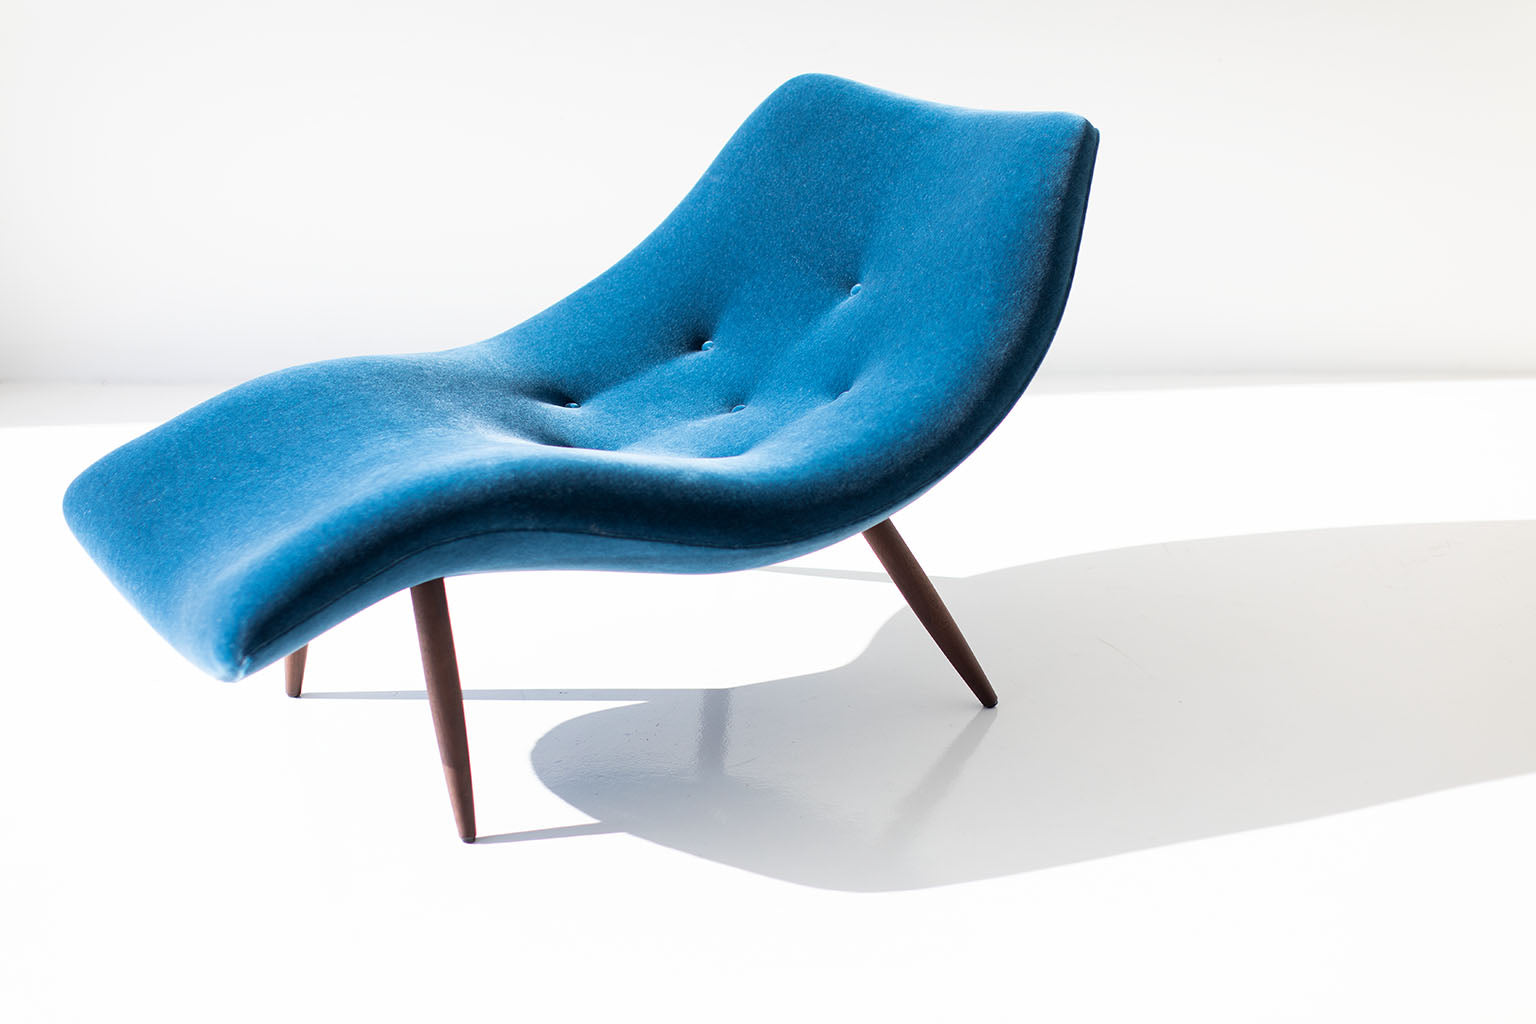      craft-modern-chaise-lounge-1704-04